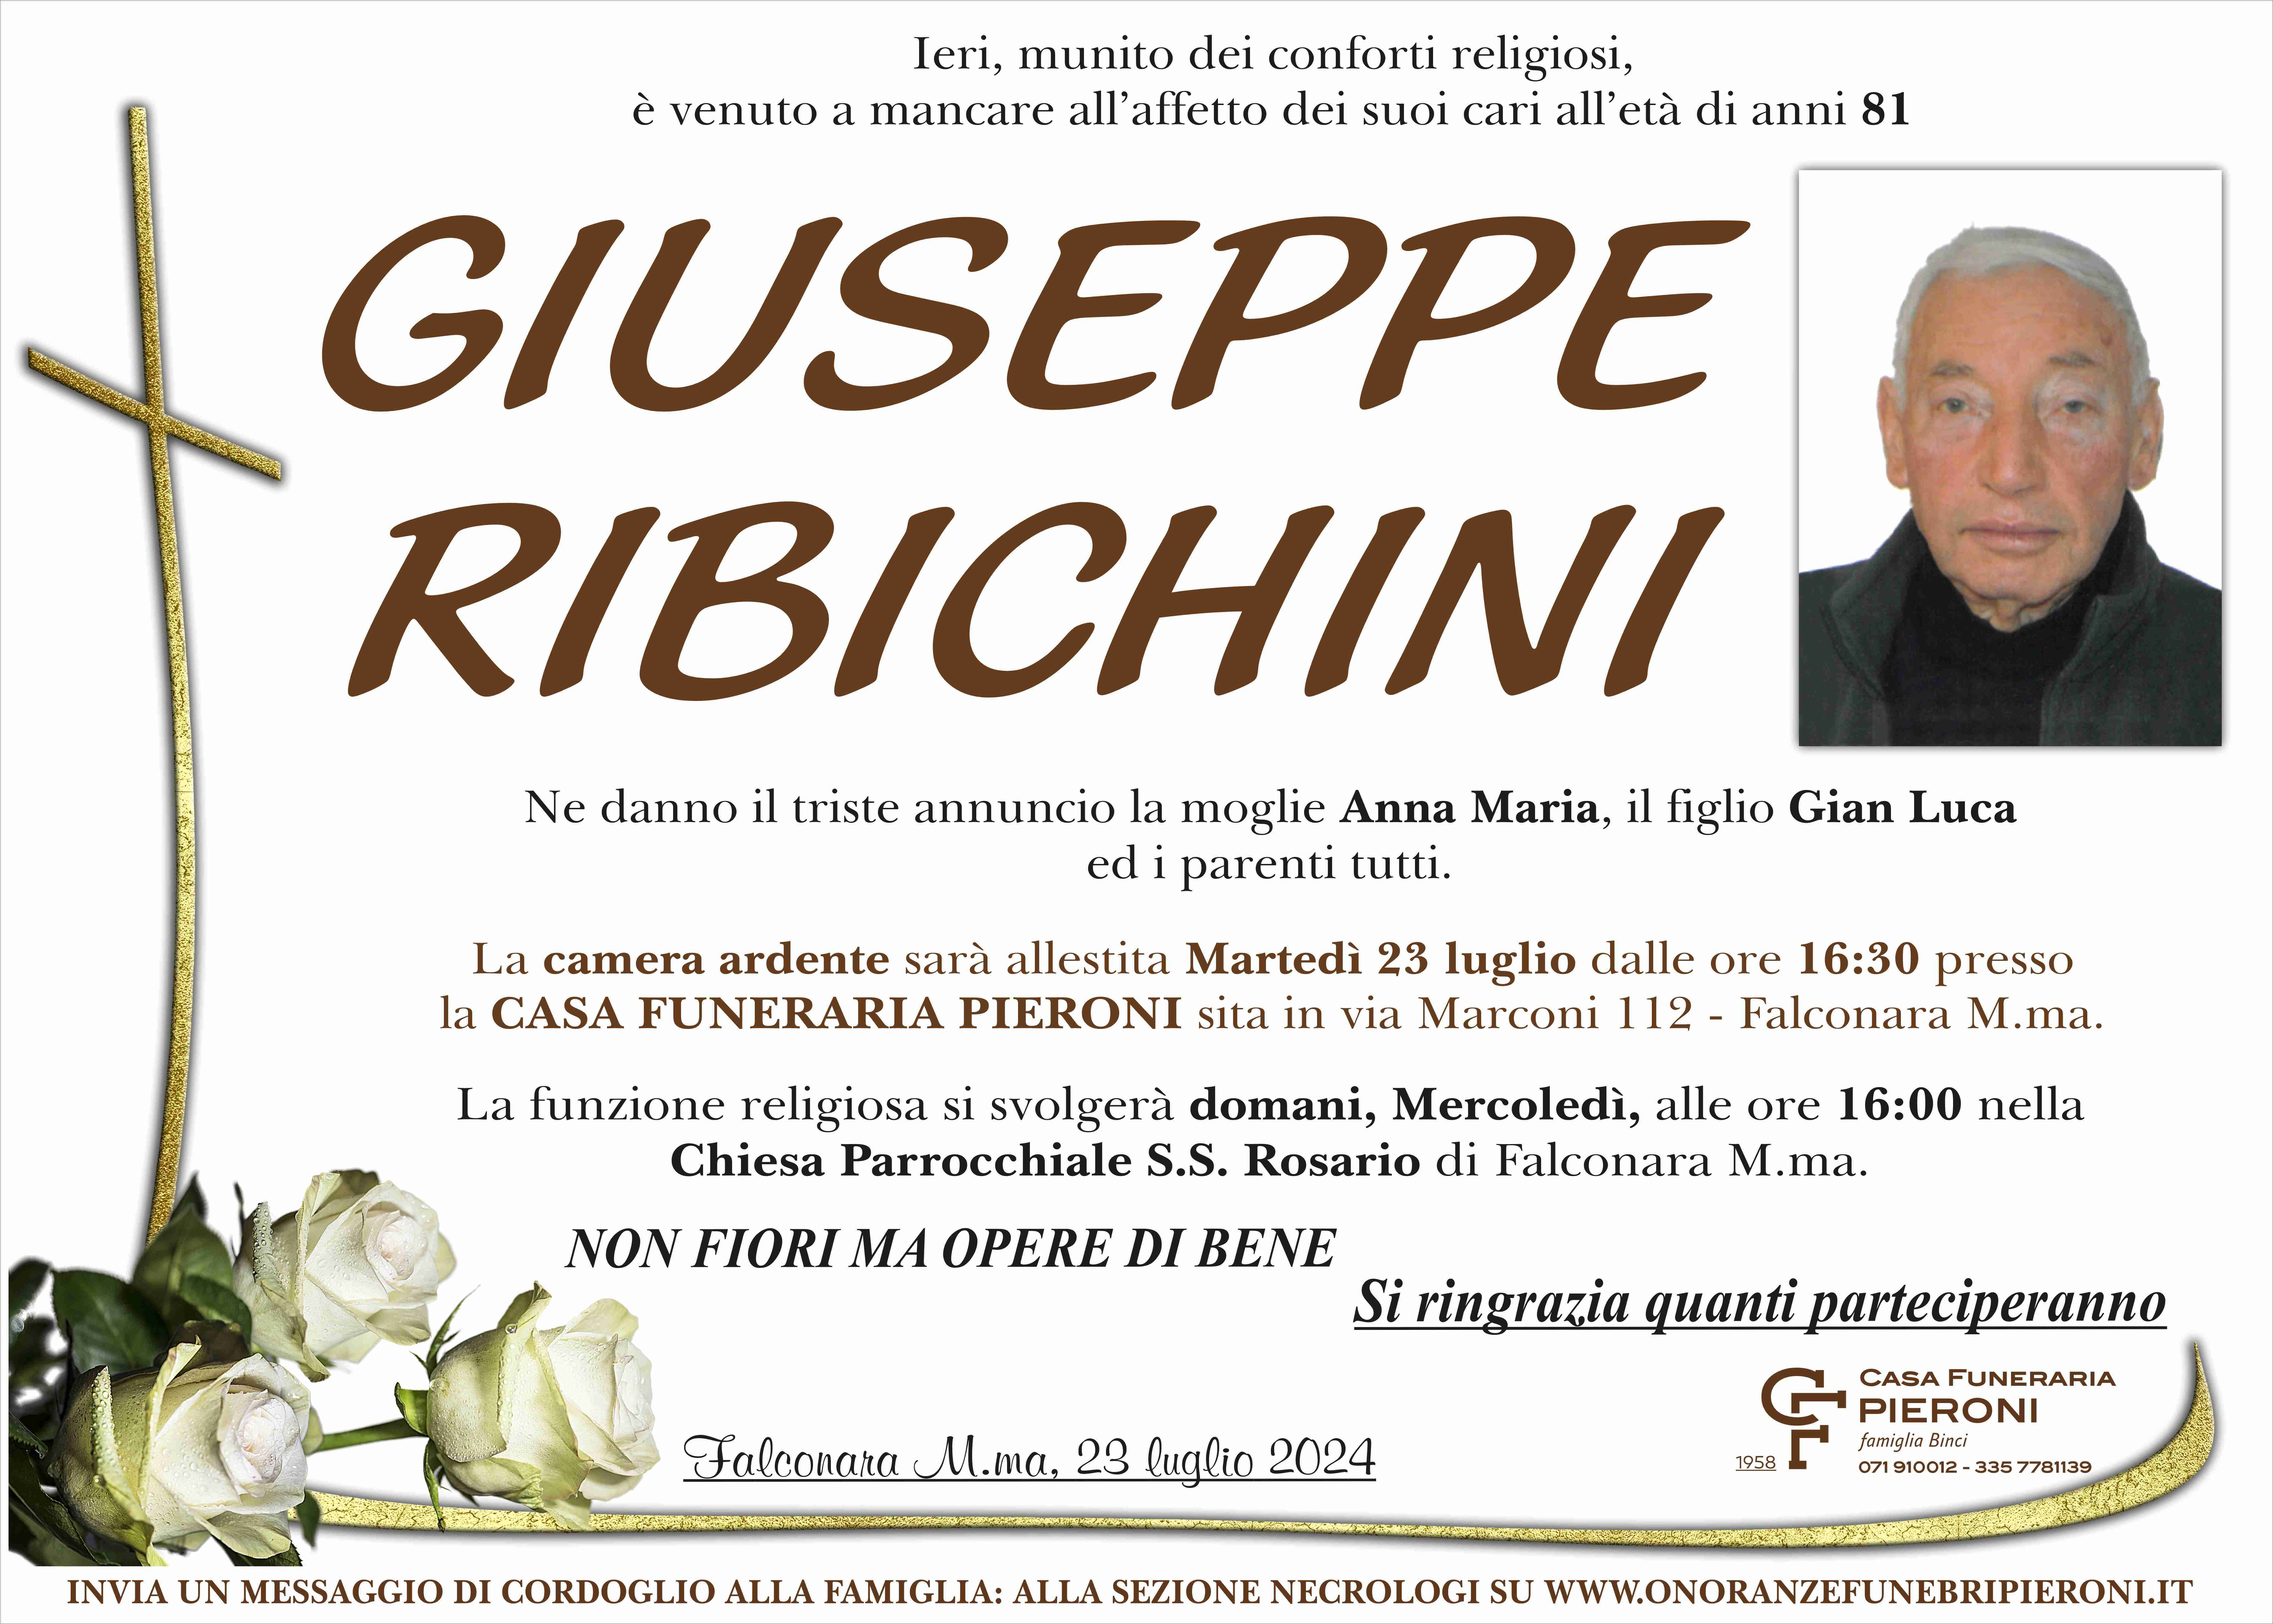 Giuseppe Ribichini